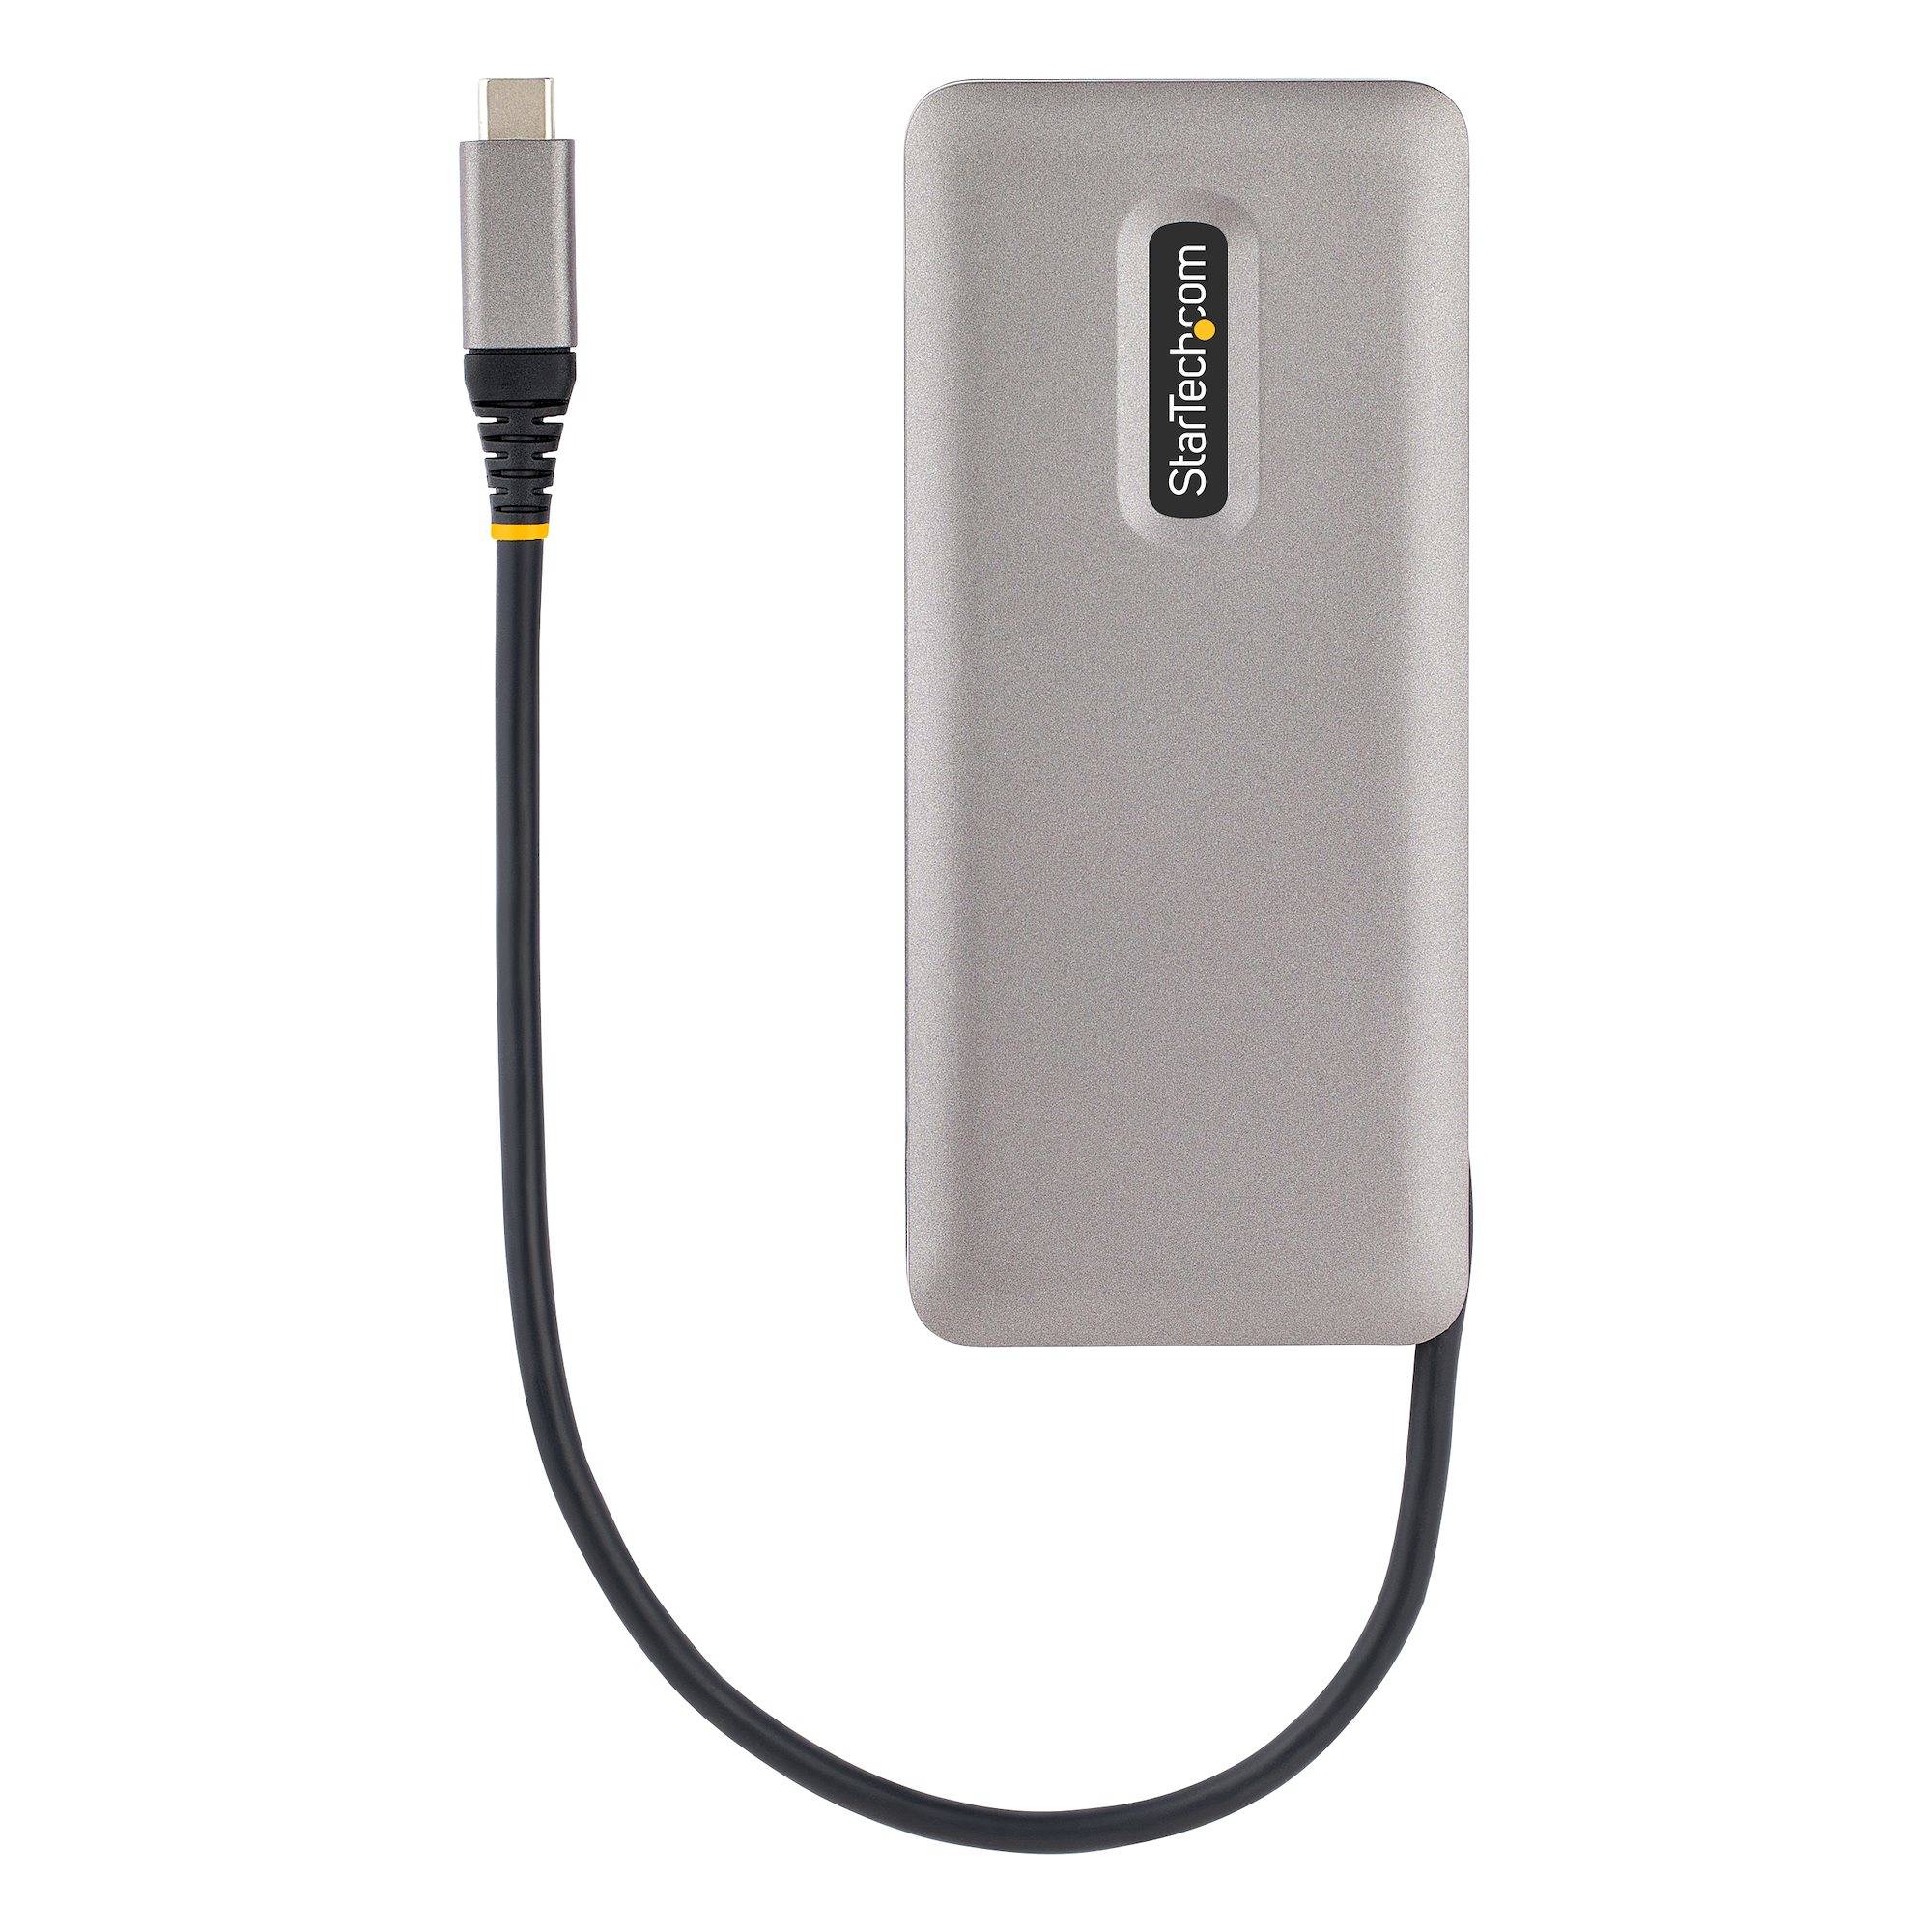 Rca Informatique - image du produit : 4-PORT USB-C HUB - 1X USB-A 3X USB-C PORTS - USB 3.1 10GBPS